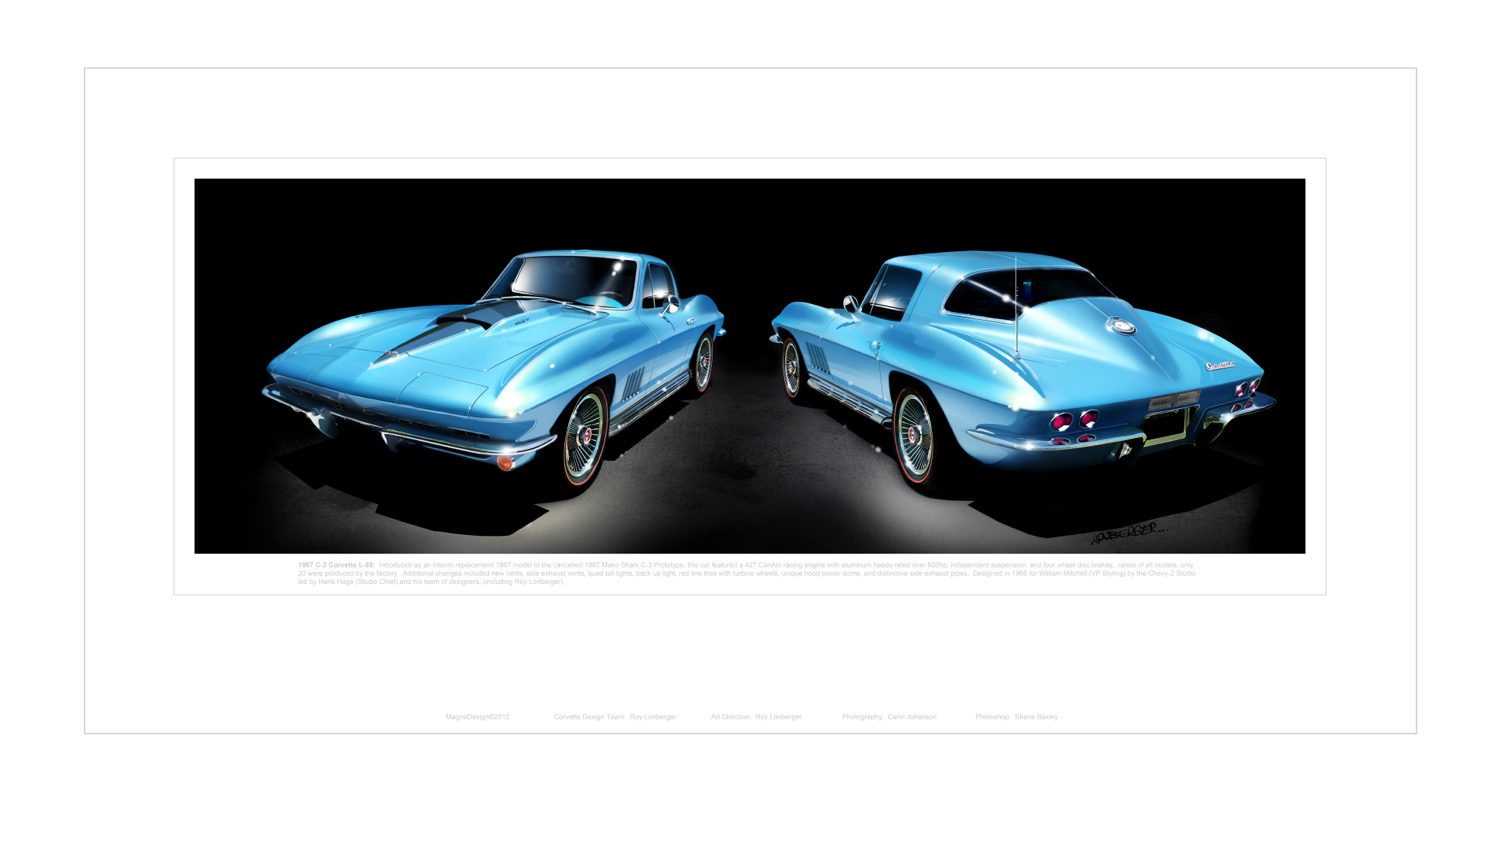 11-Corvette 1967-C-2-Wall Poster-LowRez.jpg